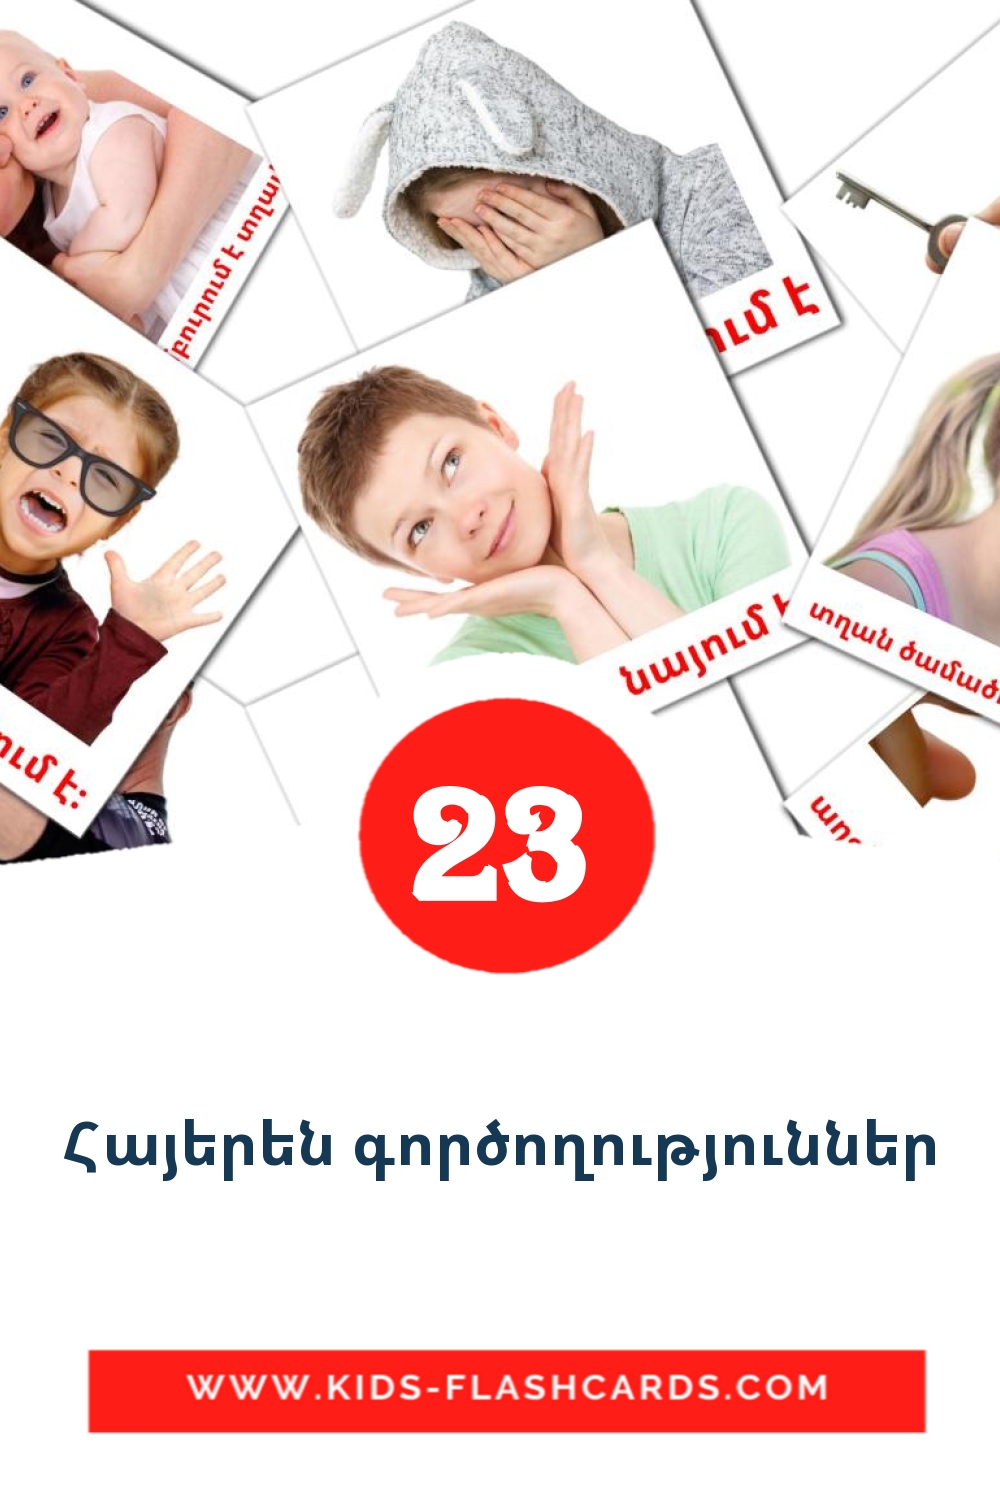 23 tarjetas didacticas de Հայերեն գործողություններ para el jardín de infancia en armenio